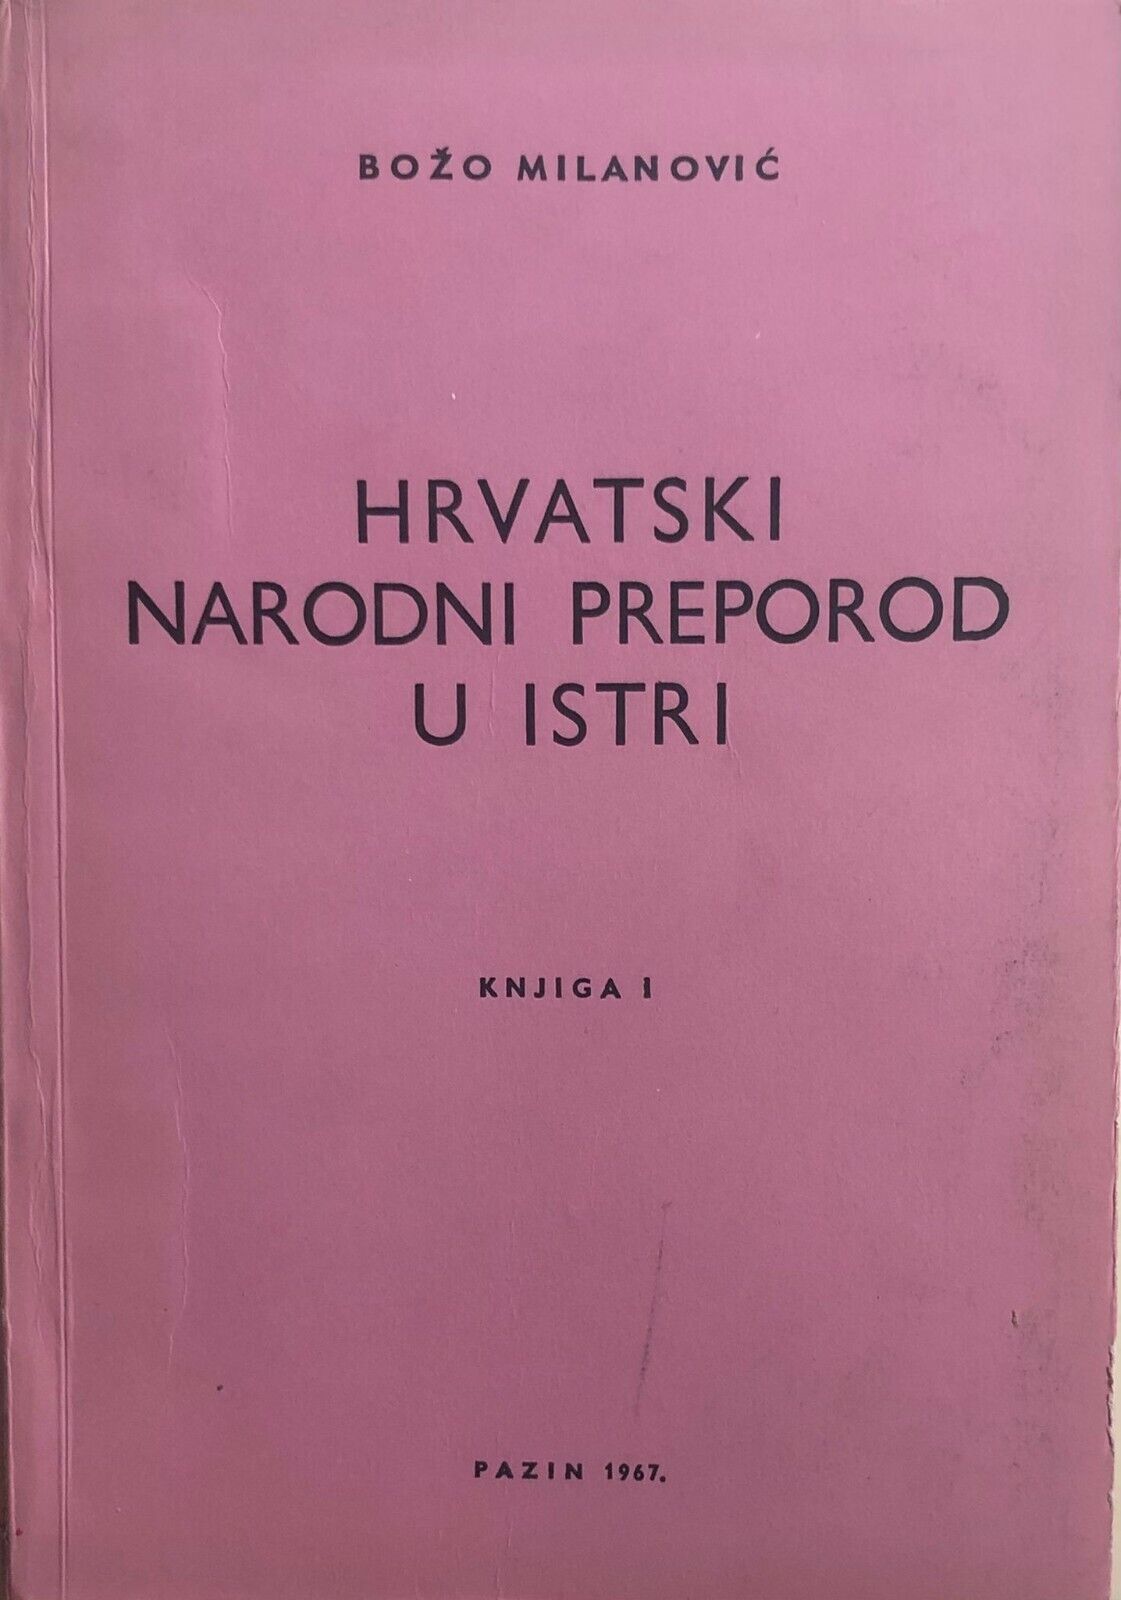 Hrvatski narodni preporod u istri di Bozo Milanovic, 1967, Pazin